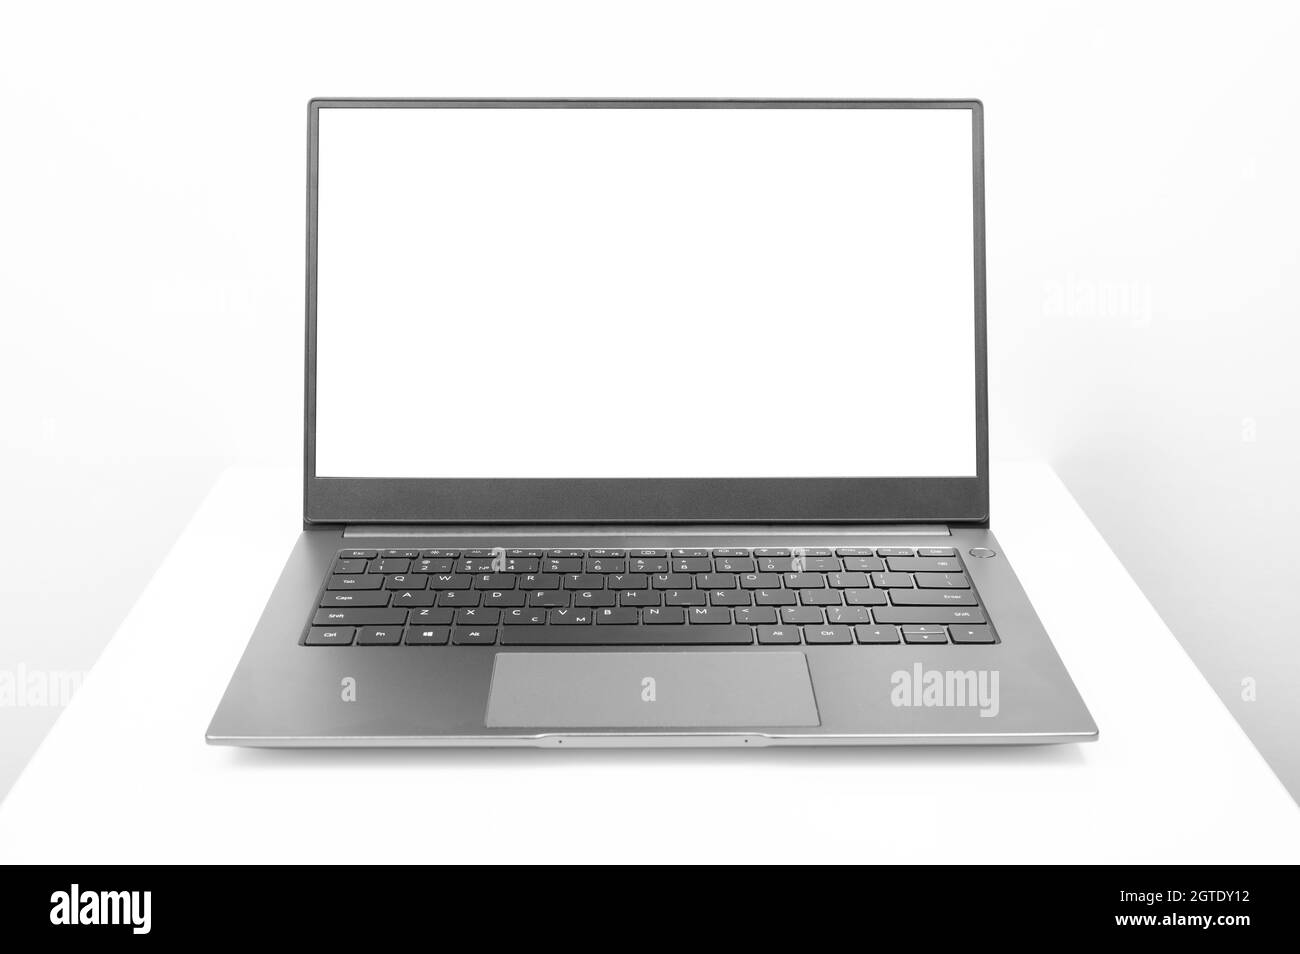 Mockup-Bild eines offenen Laptop-Computers mit weißem leeren Bildschirm. Moderner Laptop in Silber mit leerem Bildschirm auf weißem Hintergrund Stockfoto